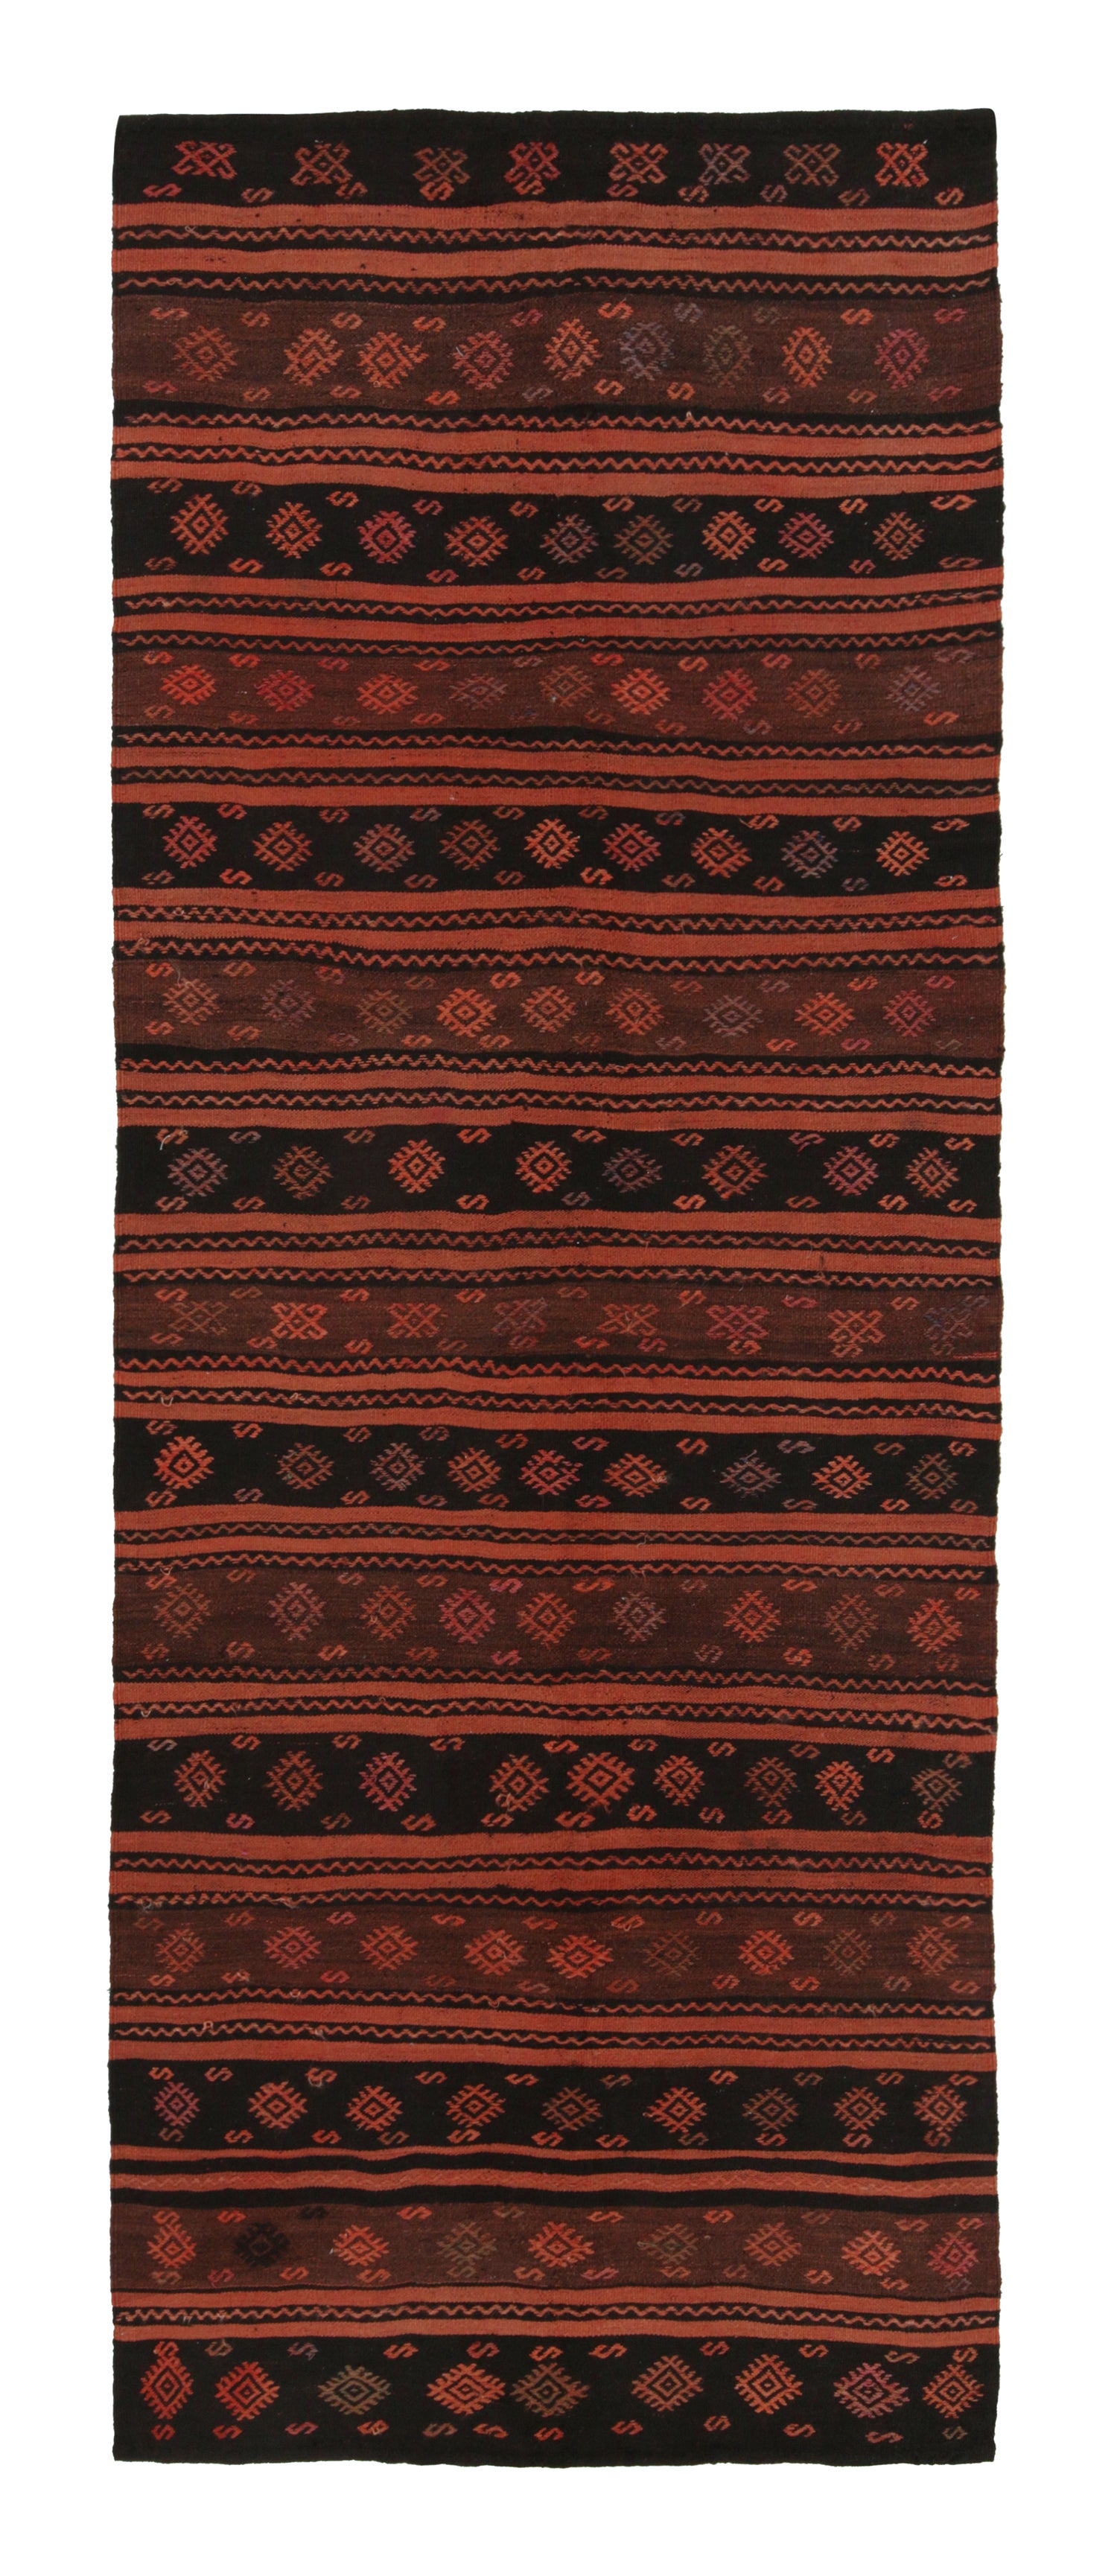 Vintage Gallery-Sized Kilim in Orange and Black Stripes Patterns by Rug & Kilim For Sale